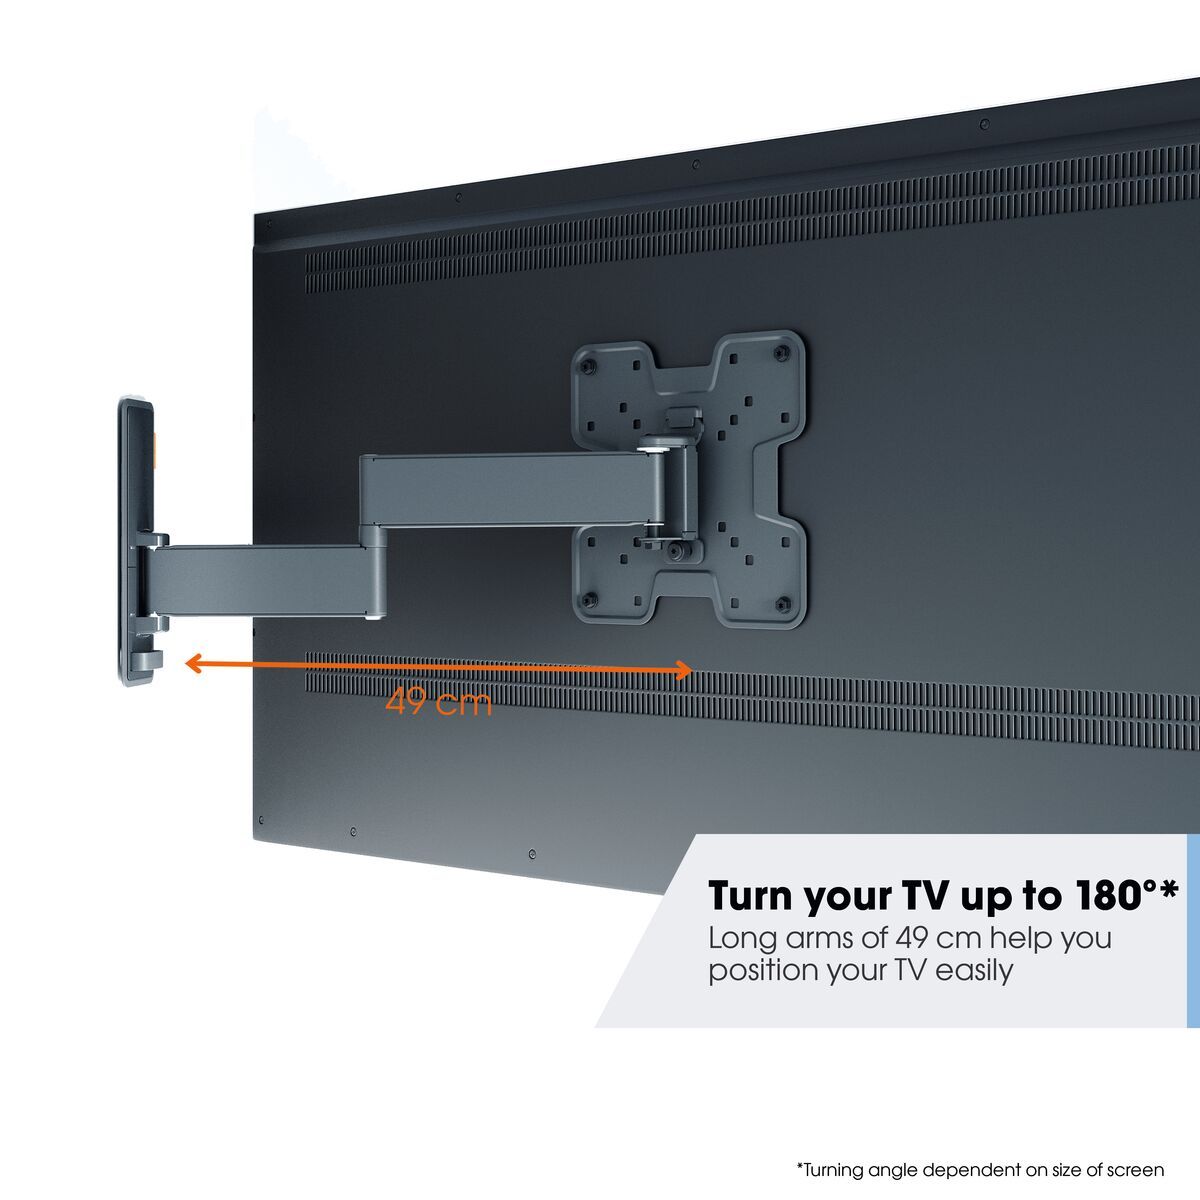 Vogel's TVM 3243 Soporte TV Giratorio (negro) - Adecuado para televisores de 19 a 43 pulgadas - Articulado (hasta 180°) rotación - Inclinable hasta 20° - USP